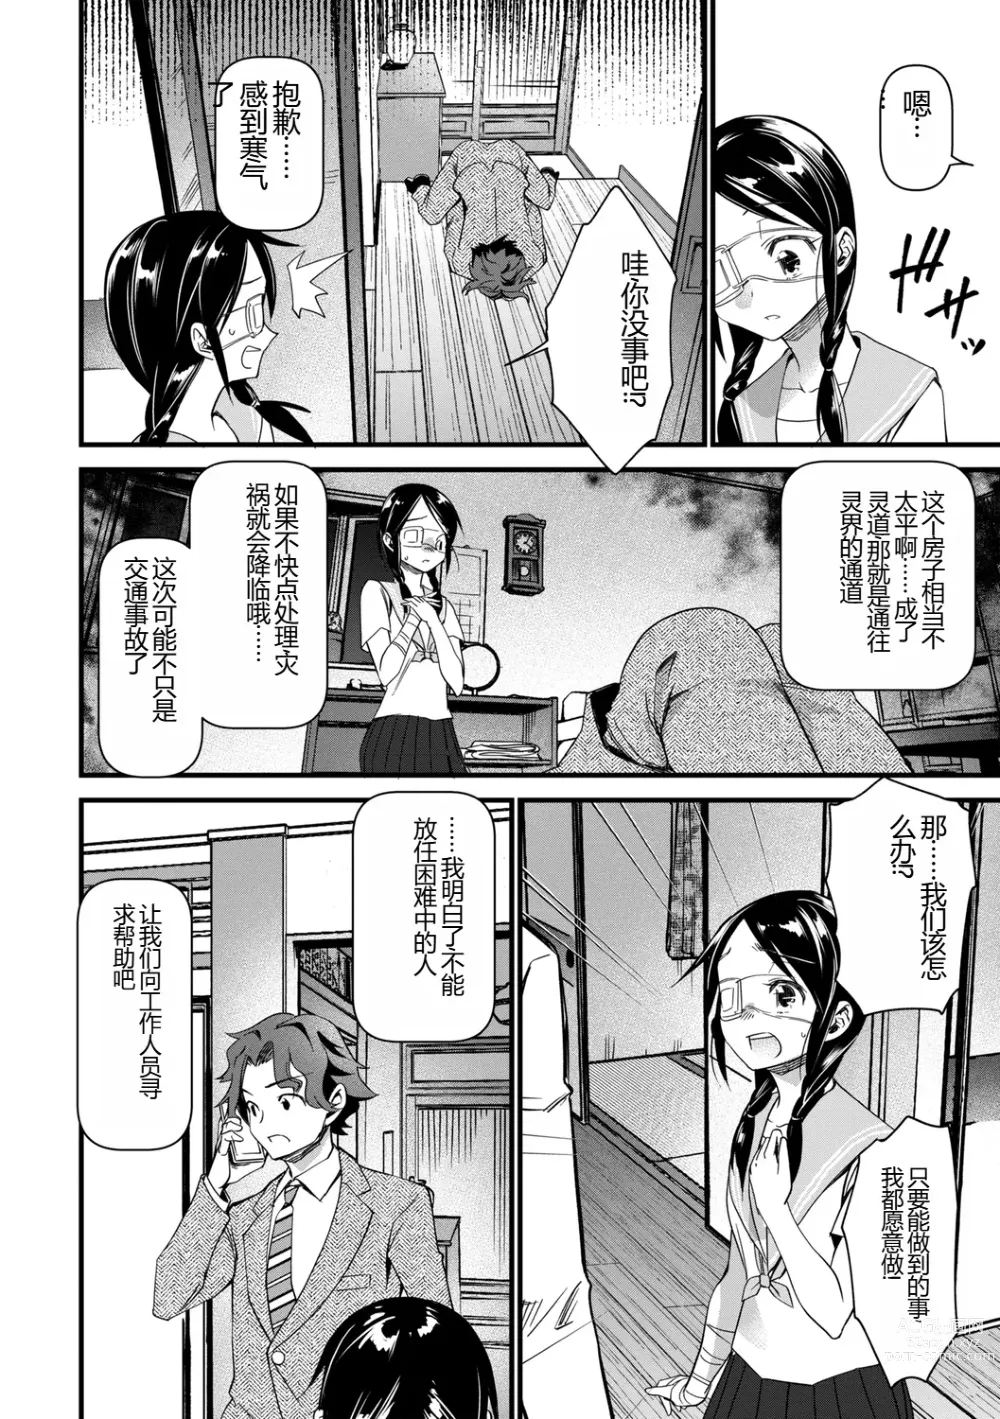 Page 12 of manga Nikugyaku Egoism